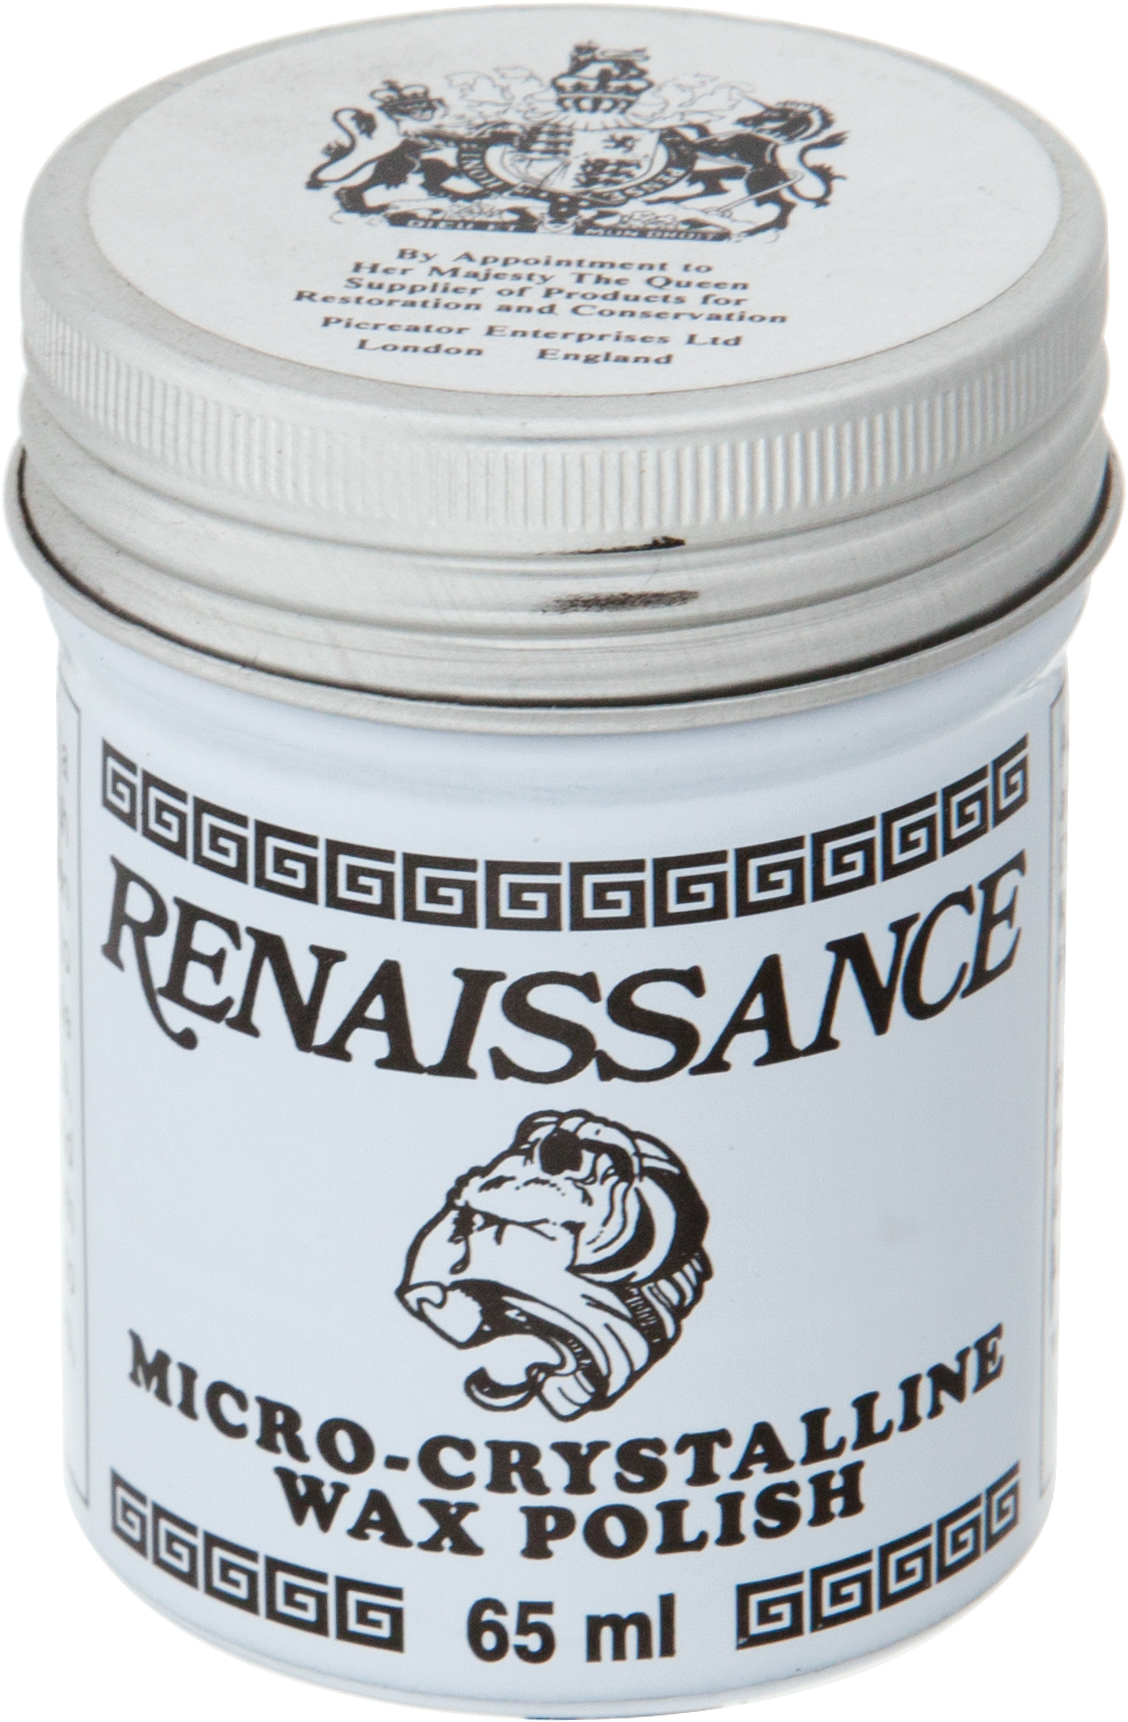 GRS renaissance was polish 65ml